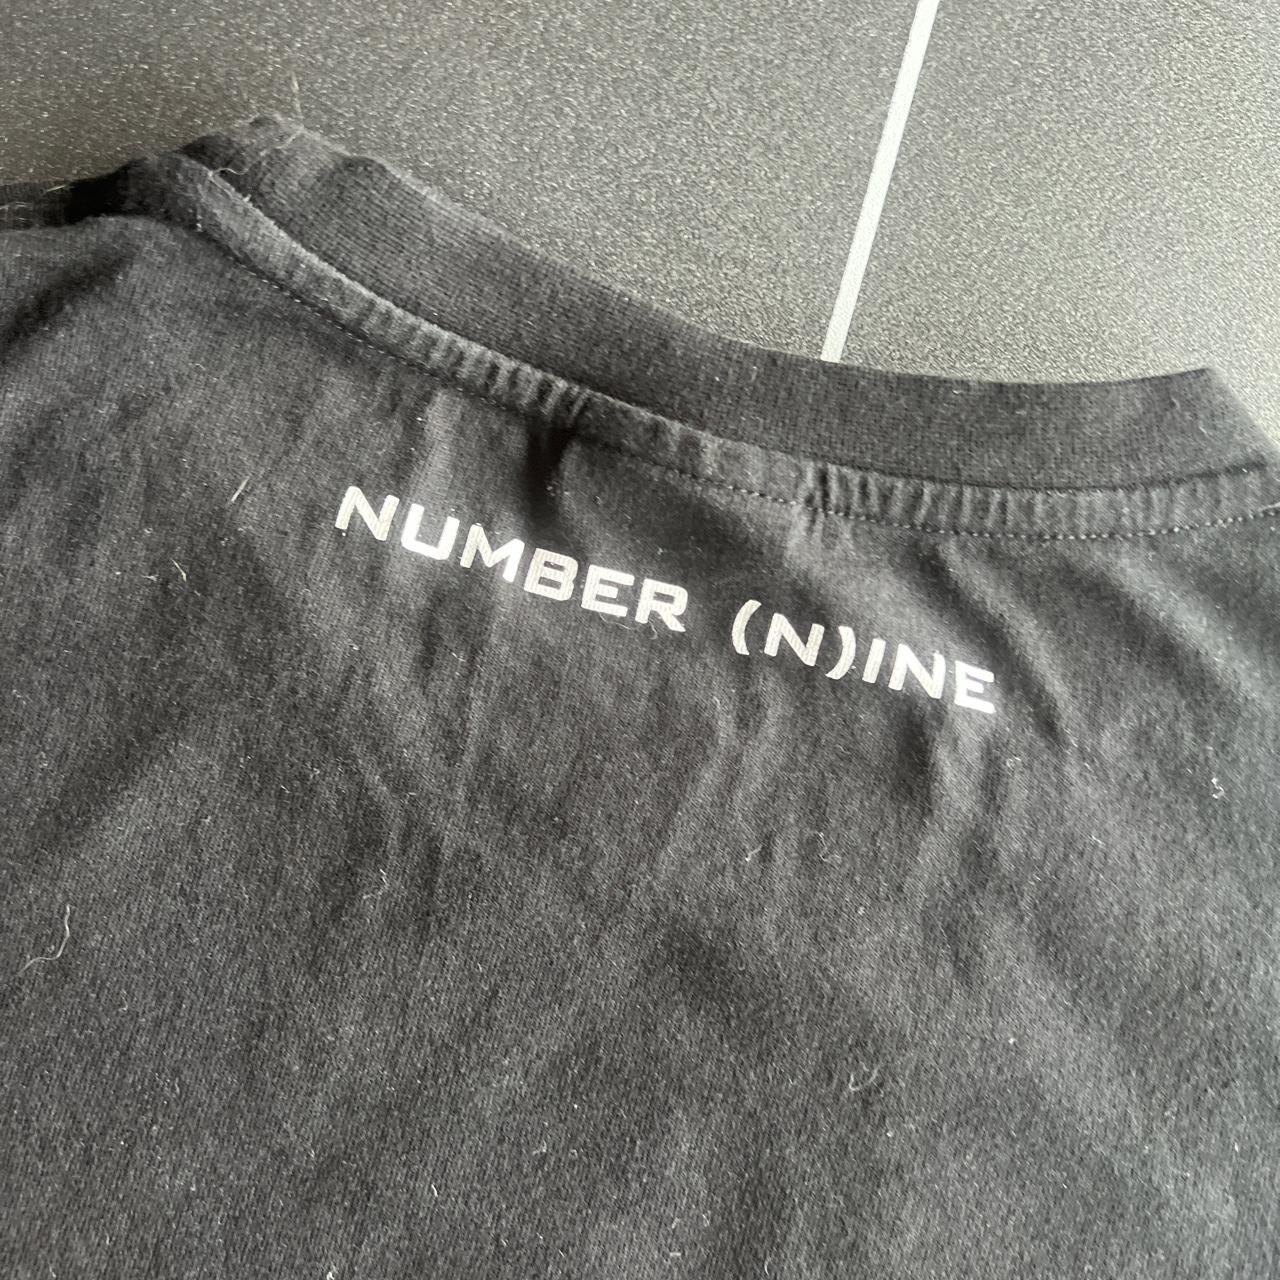 NEW Number (N)ine Marlboro Star Logo t-shirt dm me - Depop